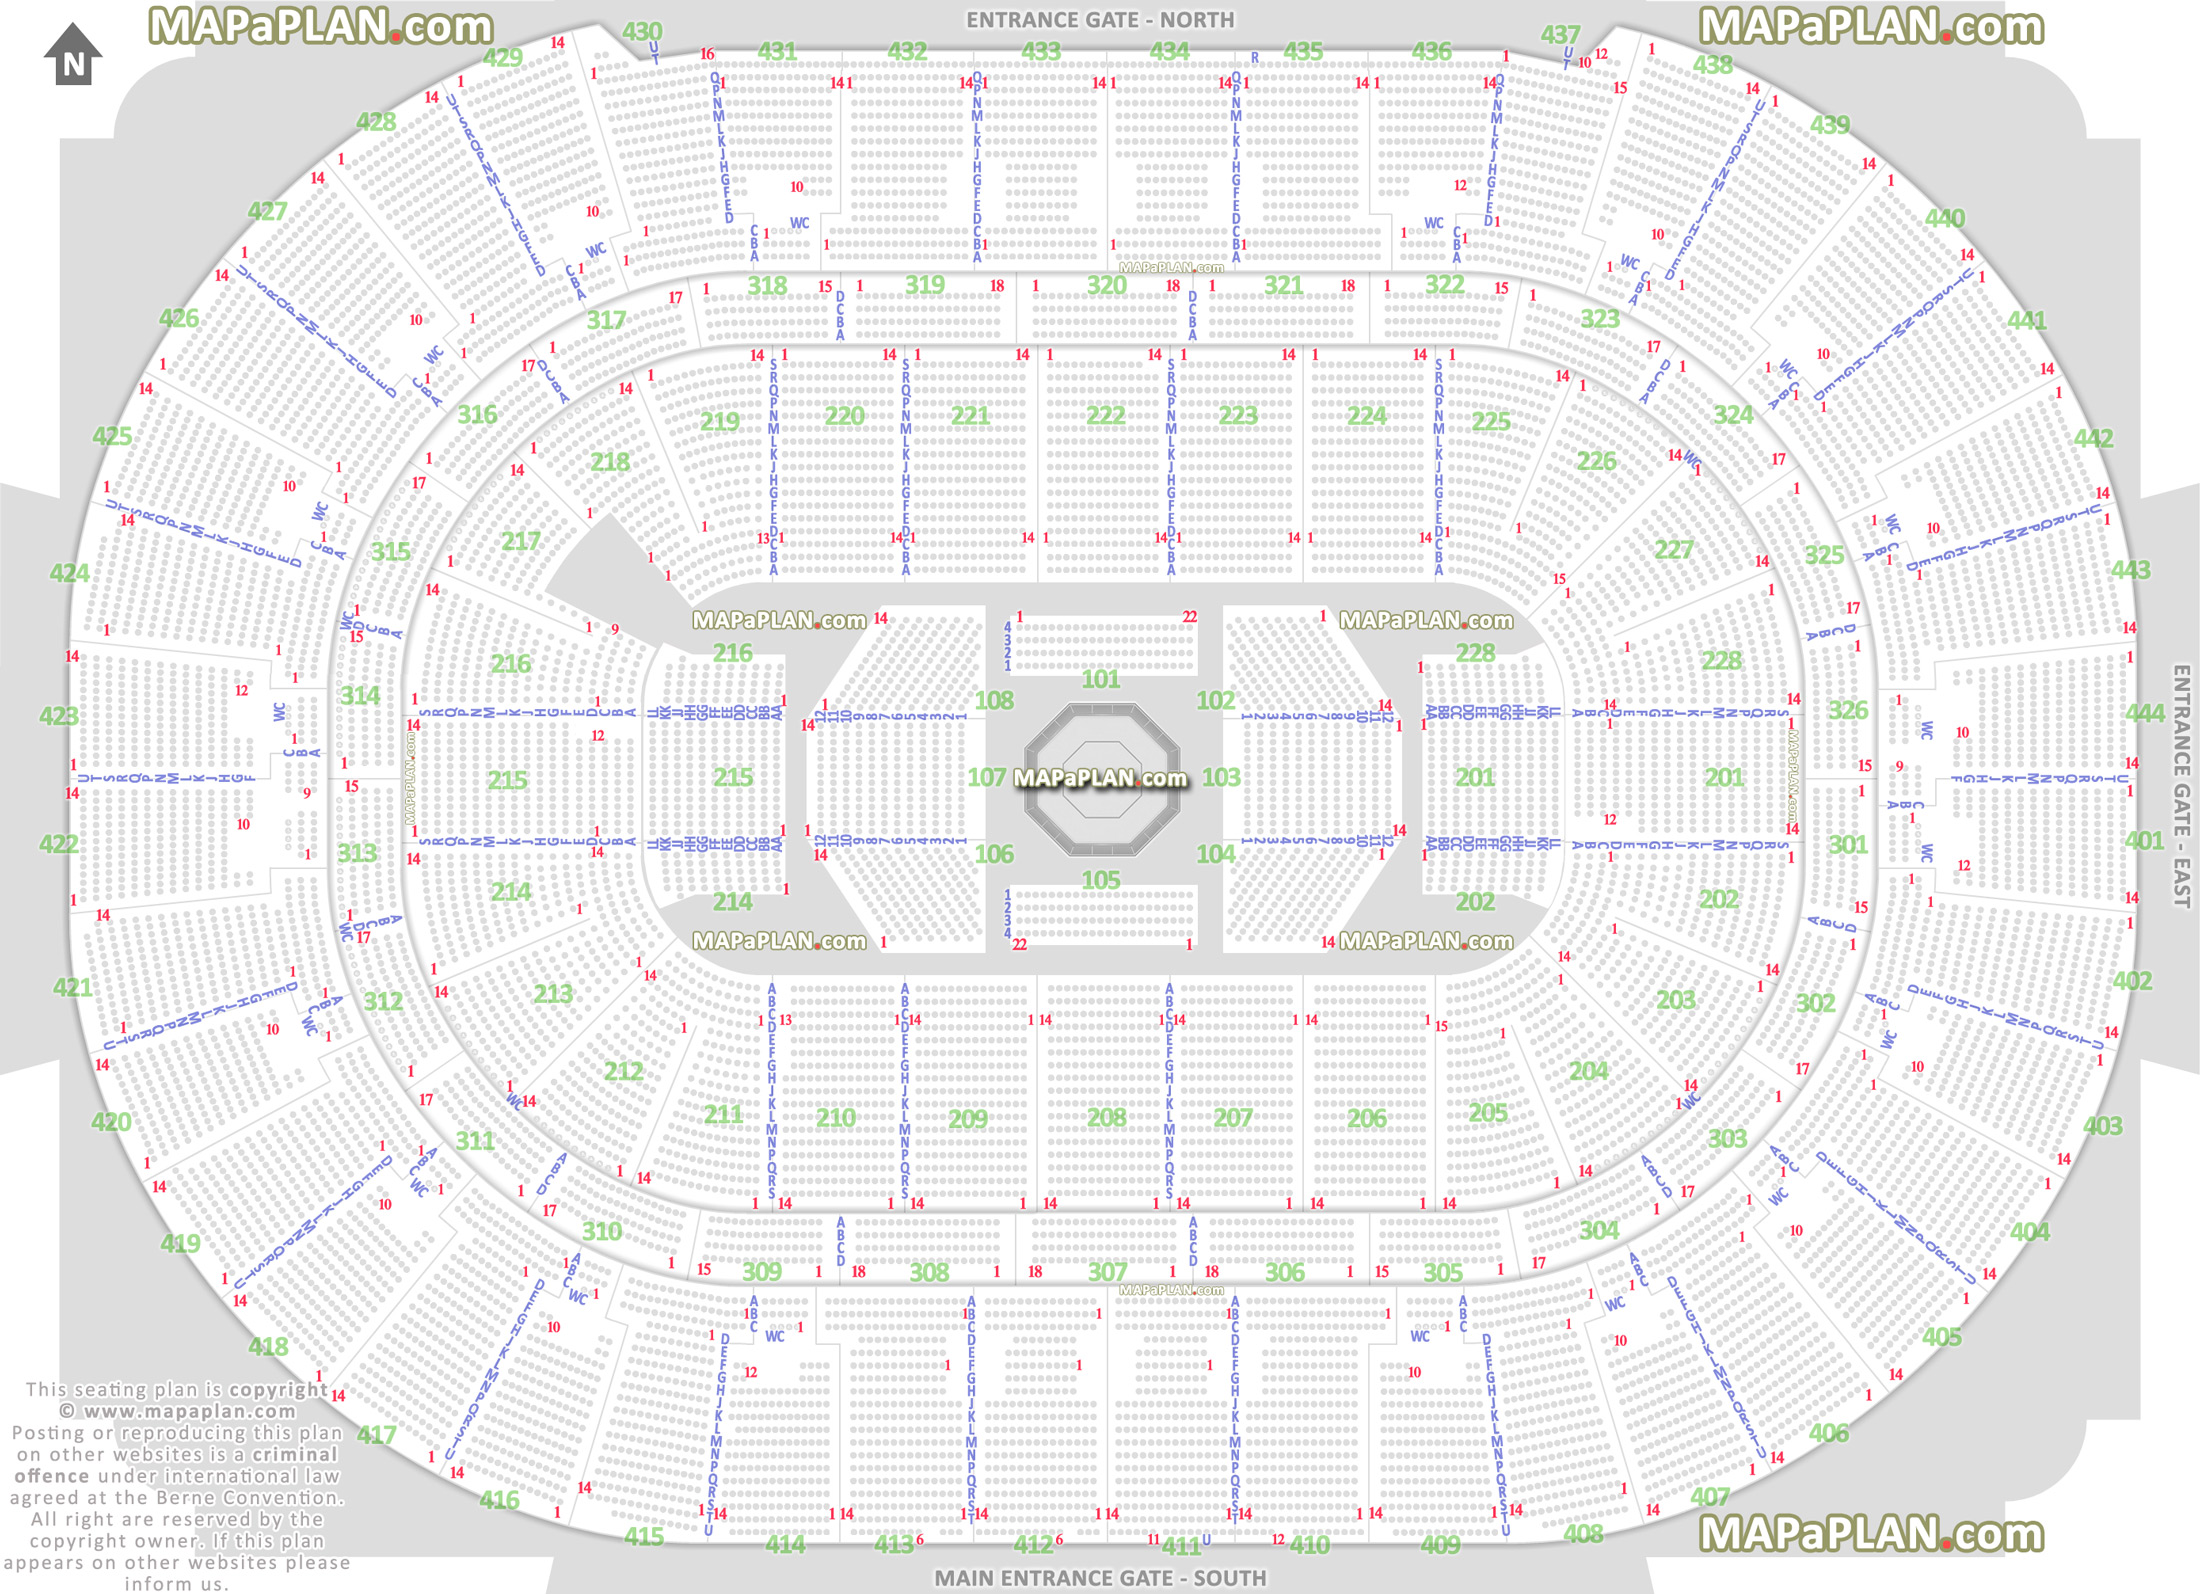 Honda Center Seating Chart For Ufc